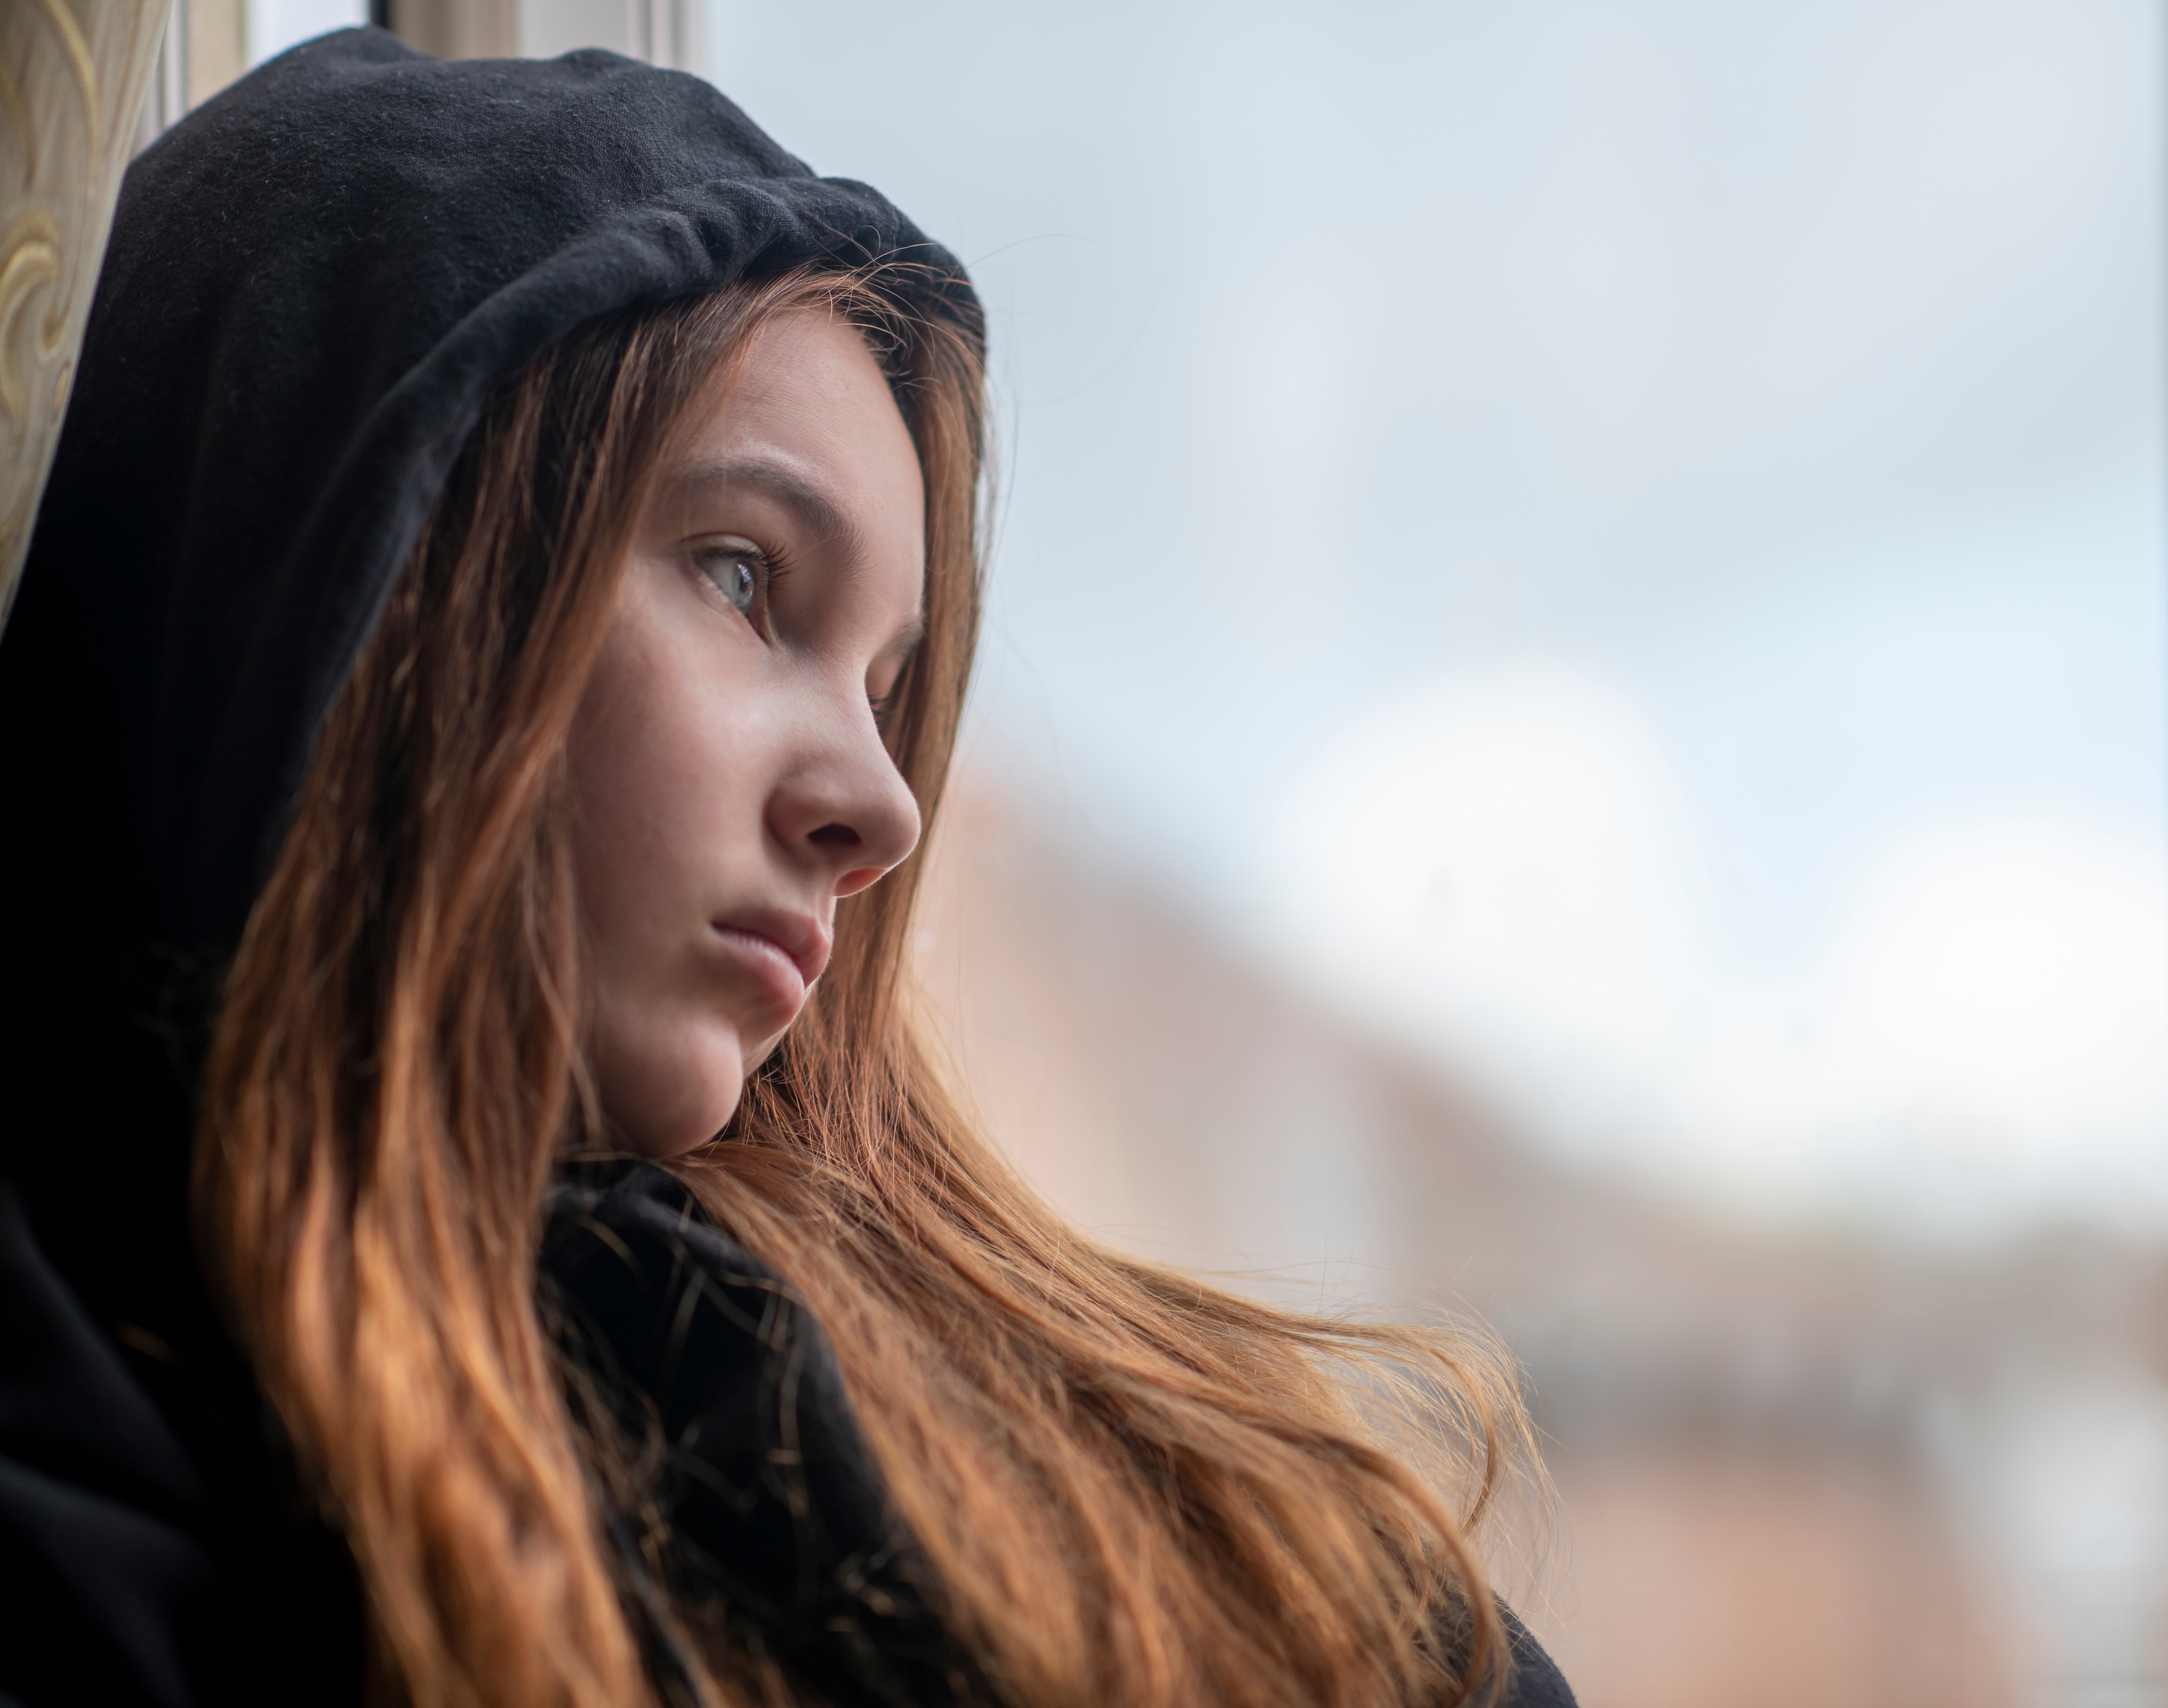 A sad teenage girl looking outside | Source: Shutterstock